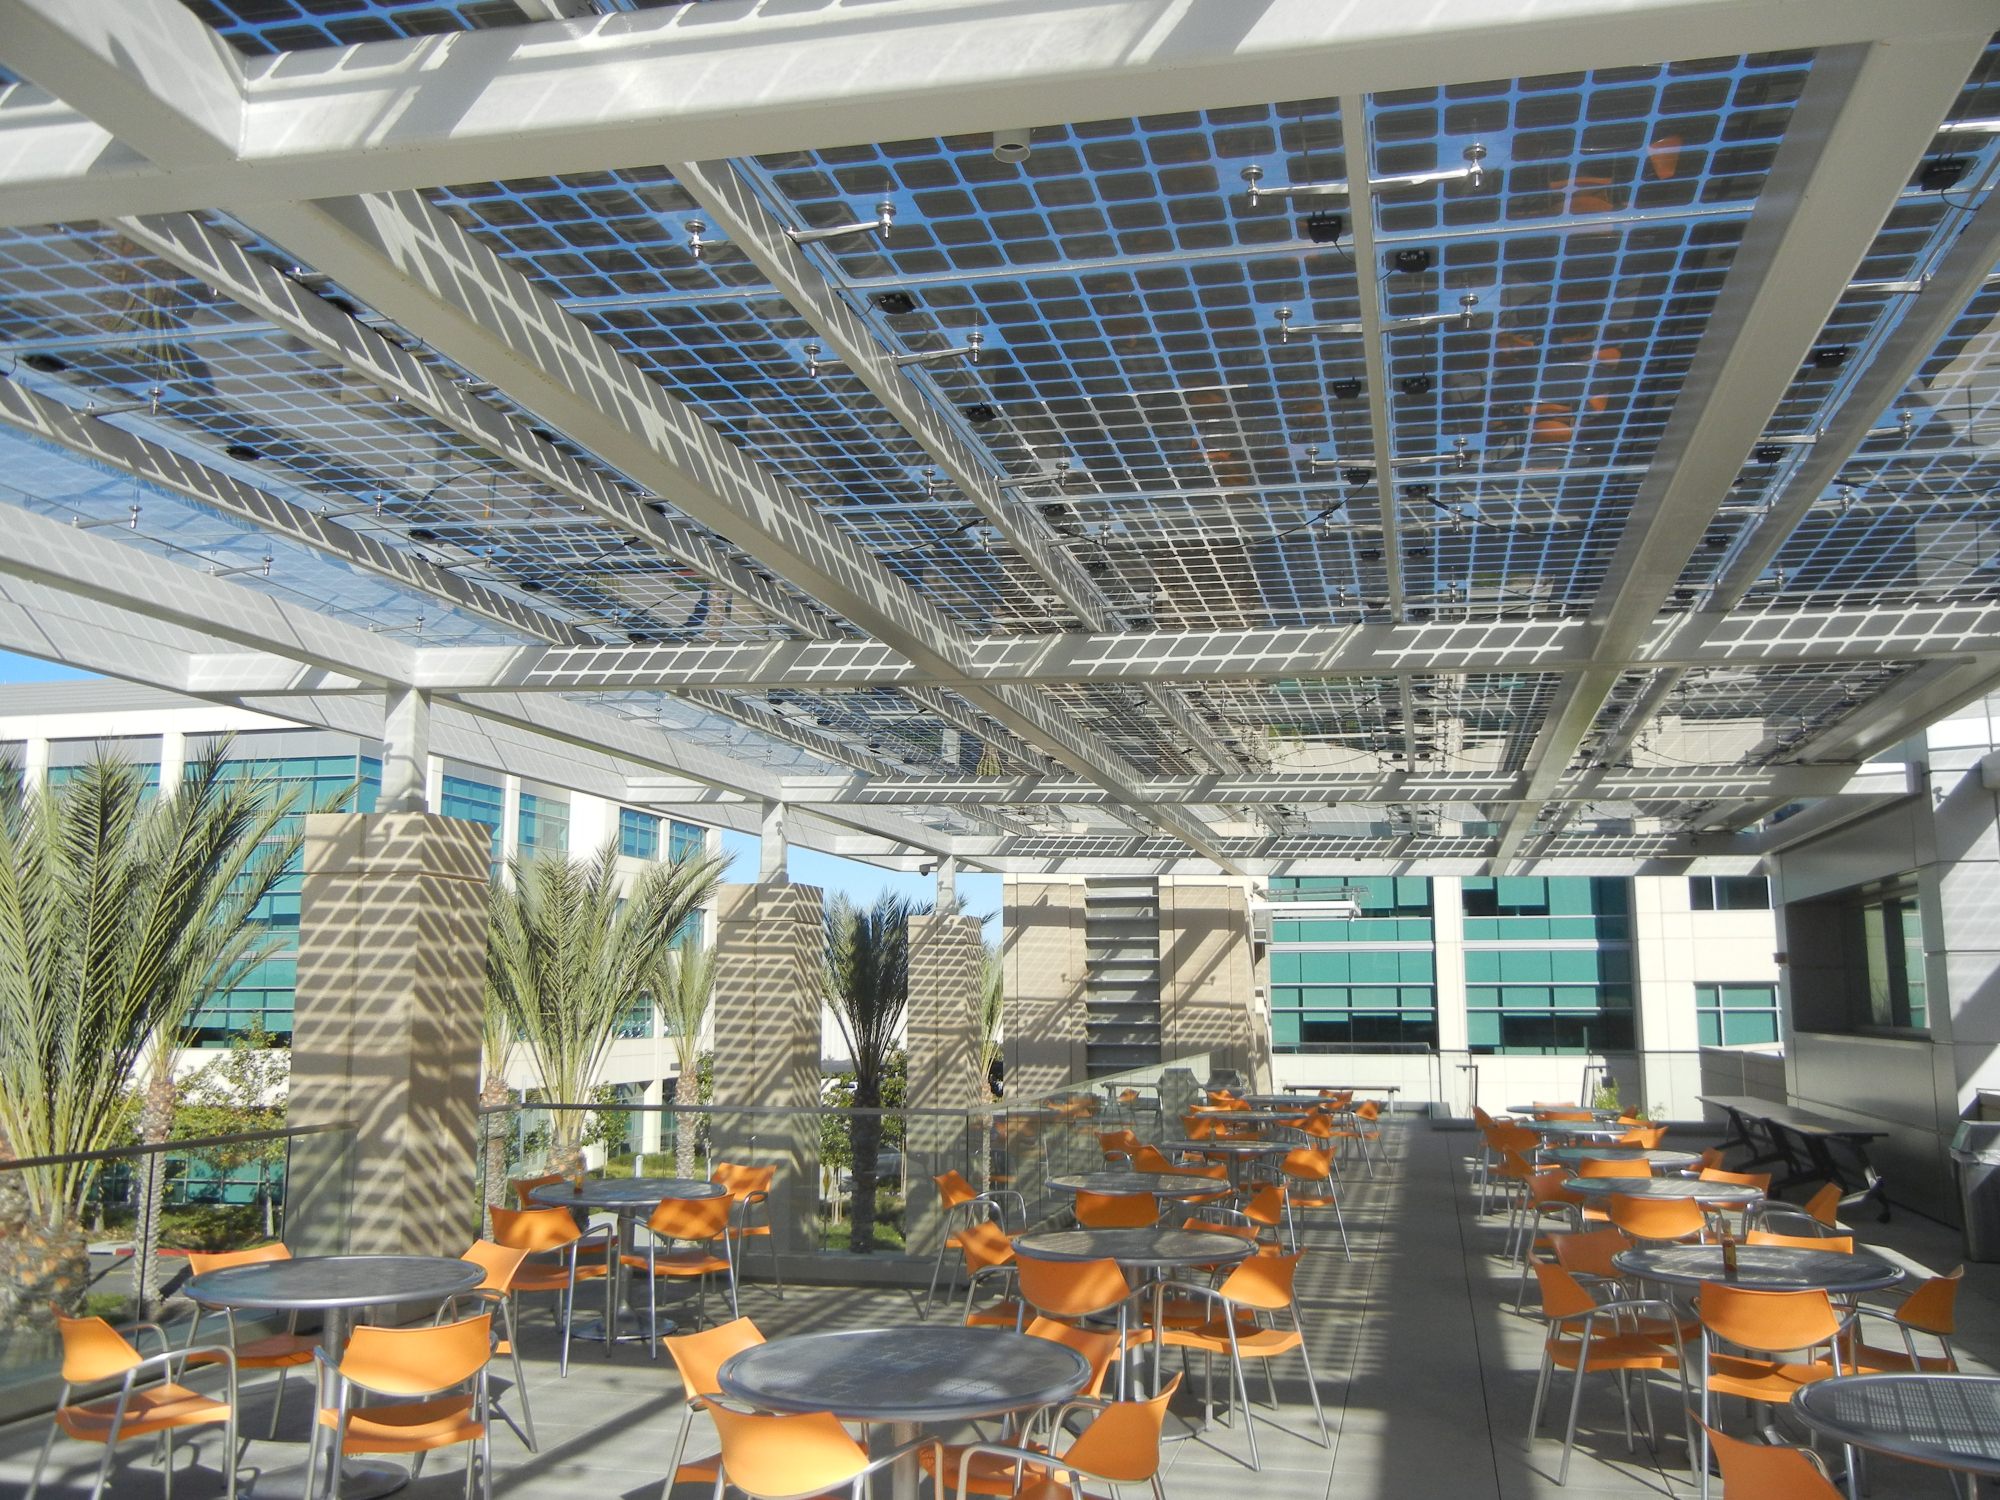 Panel solar transparente para agricultura invernaderos